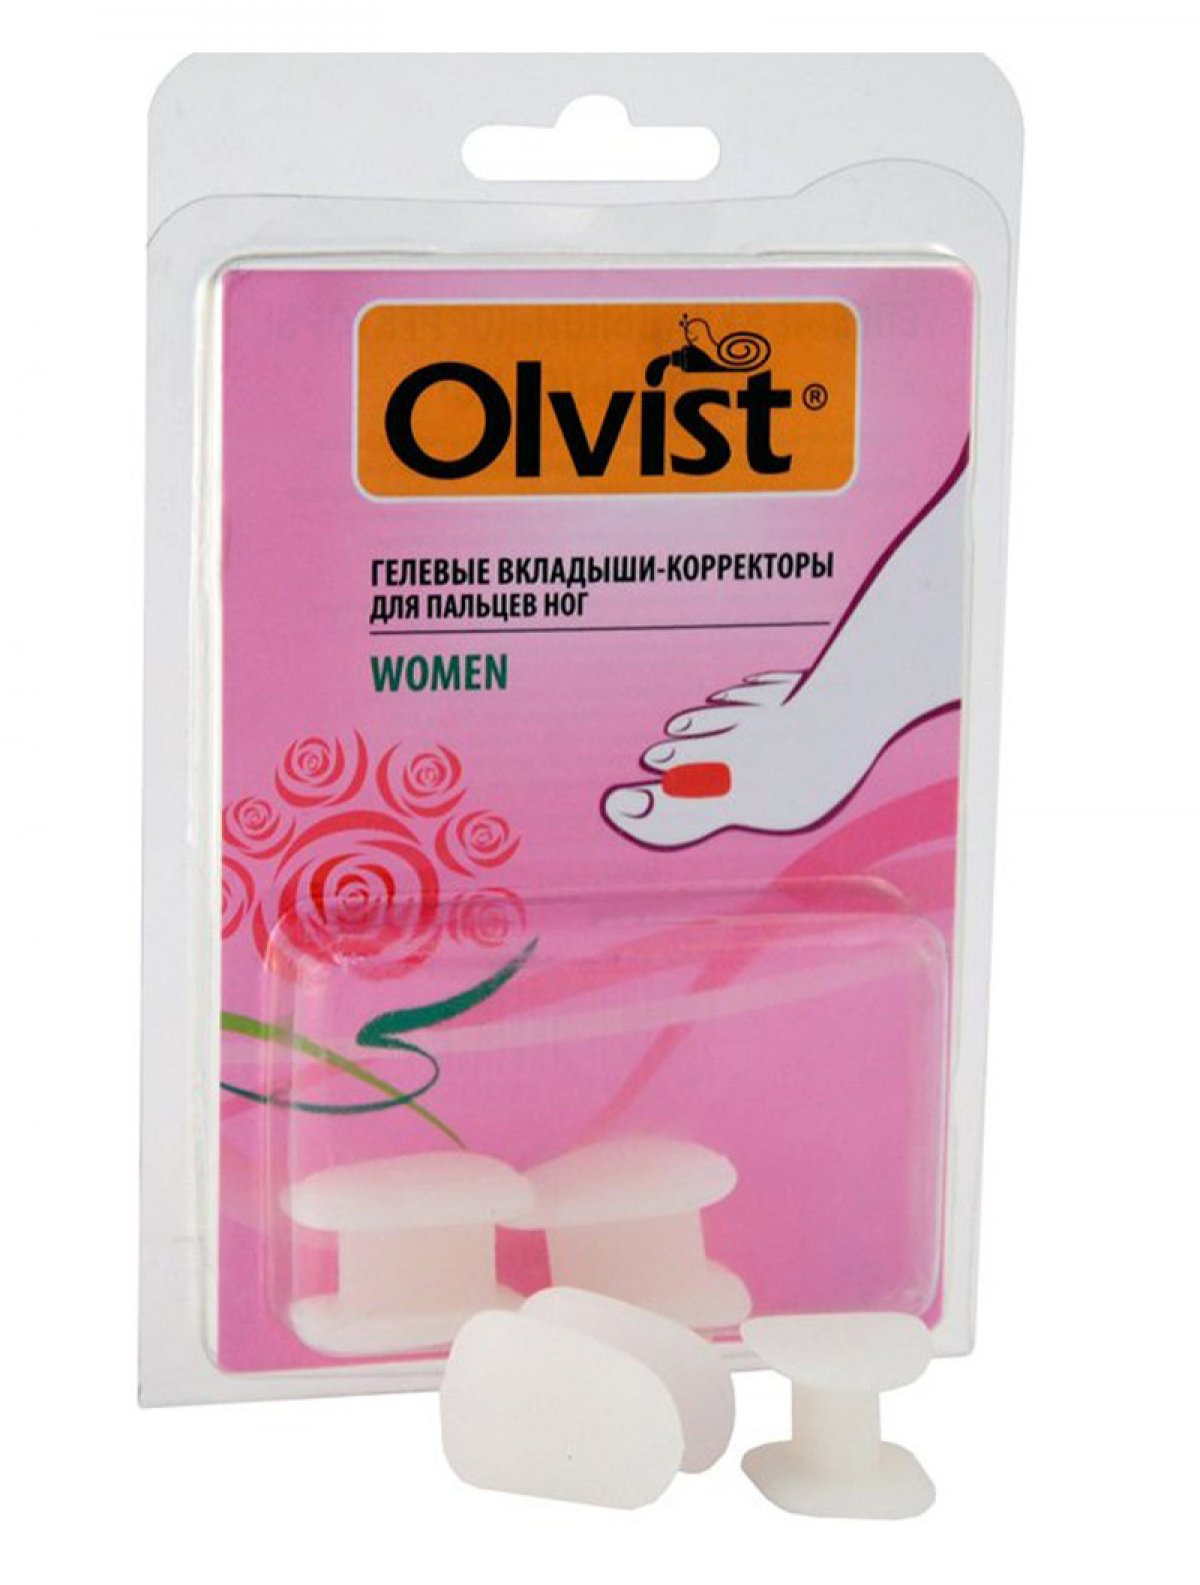 Olvist 12-05 гелевые вкладыши-корректоры для пальцев ног